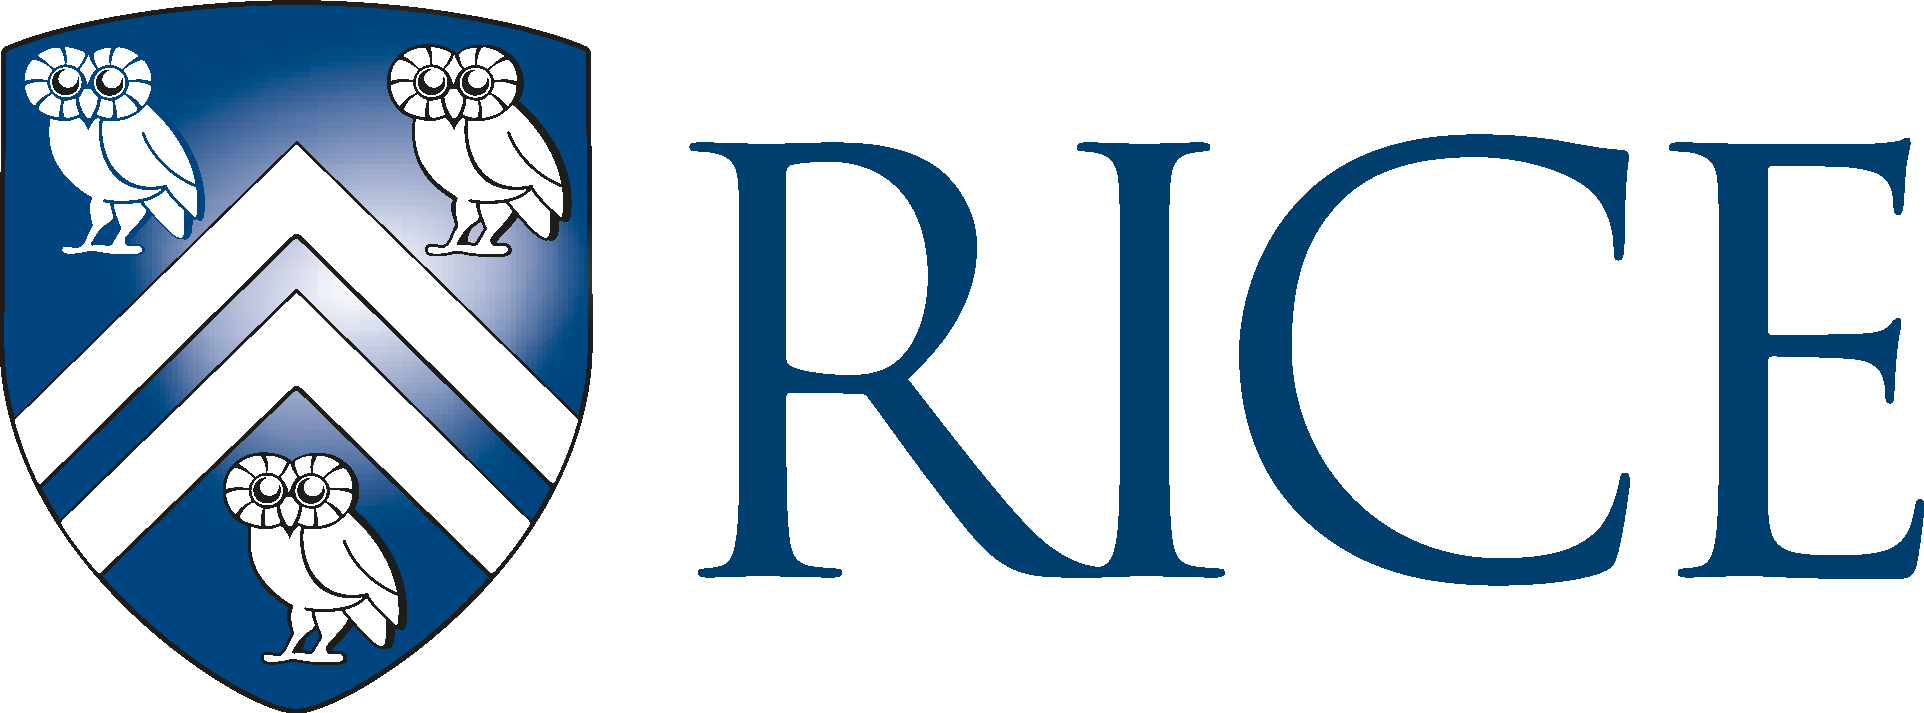 Rice University - William Marsh Rice University - Университет Уильяма Марша Райса - Университет Райса